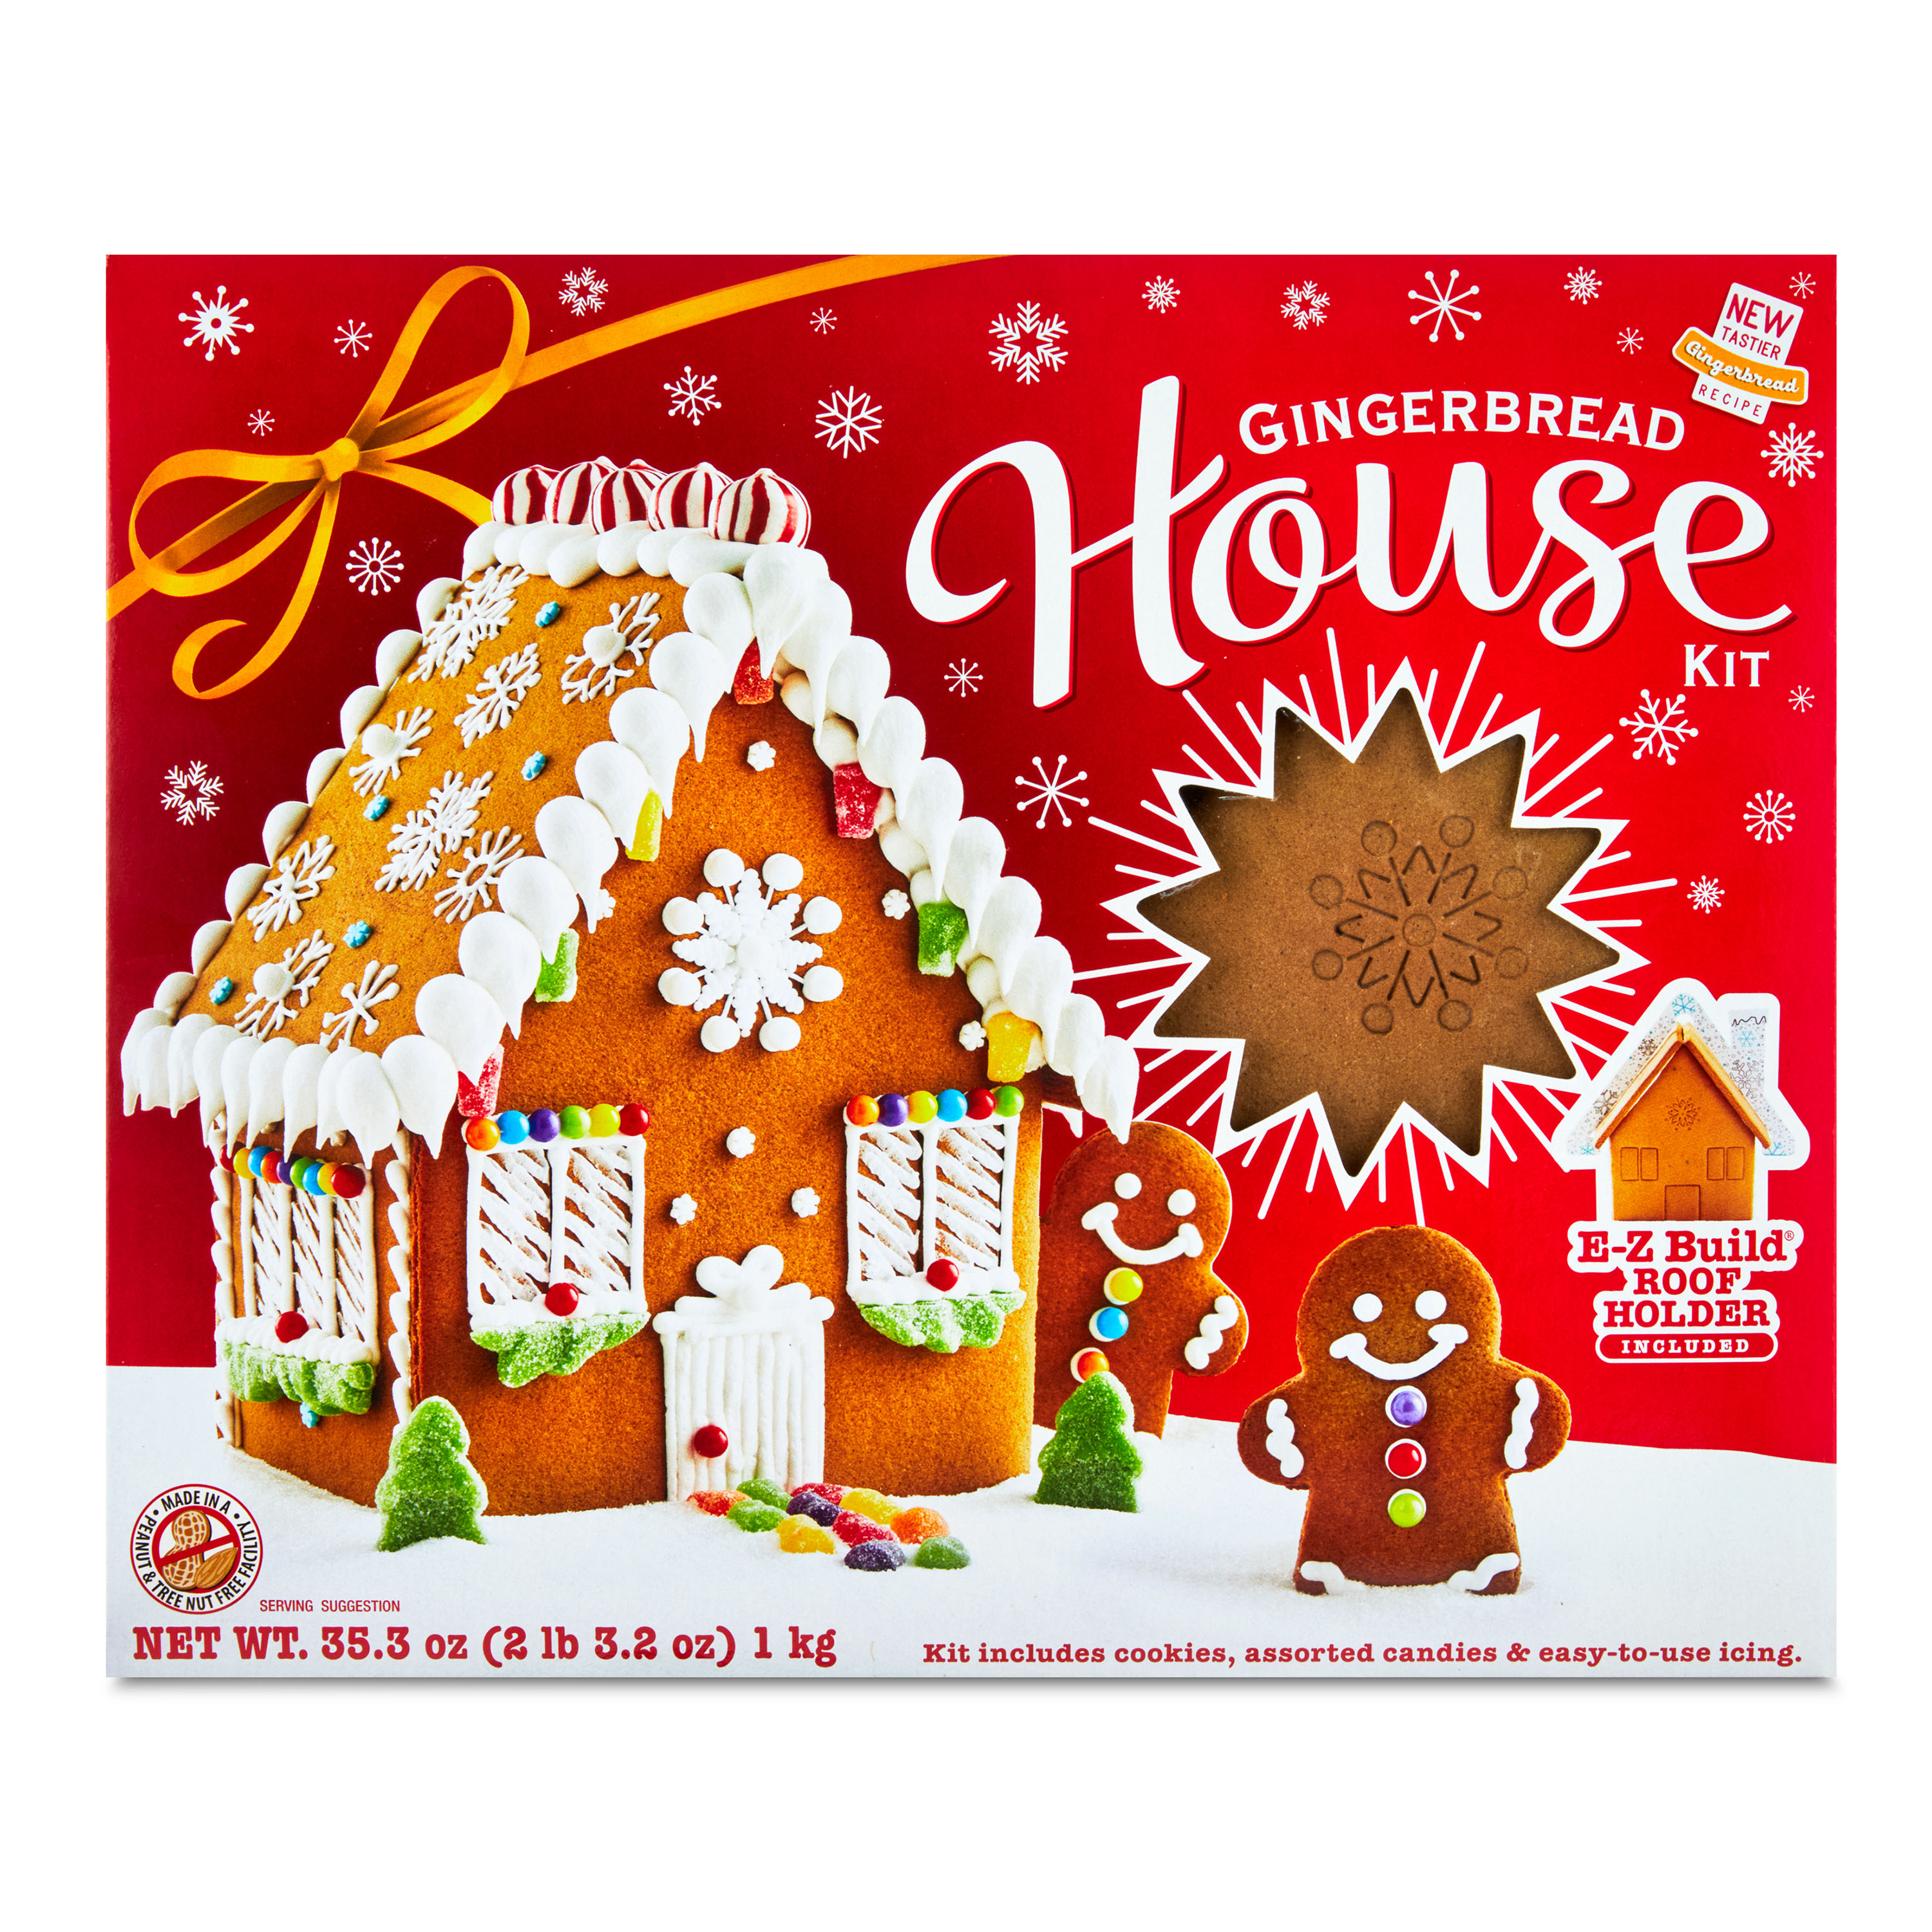 Freshness Guaranteed Christmas Gingerbread House Kit, 35.3 oz, 1 Count - image 1 of 13